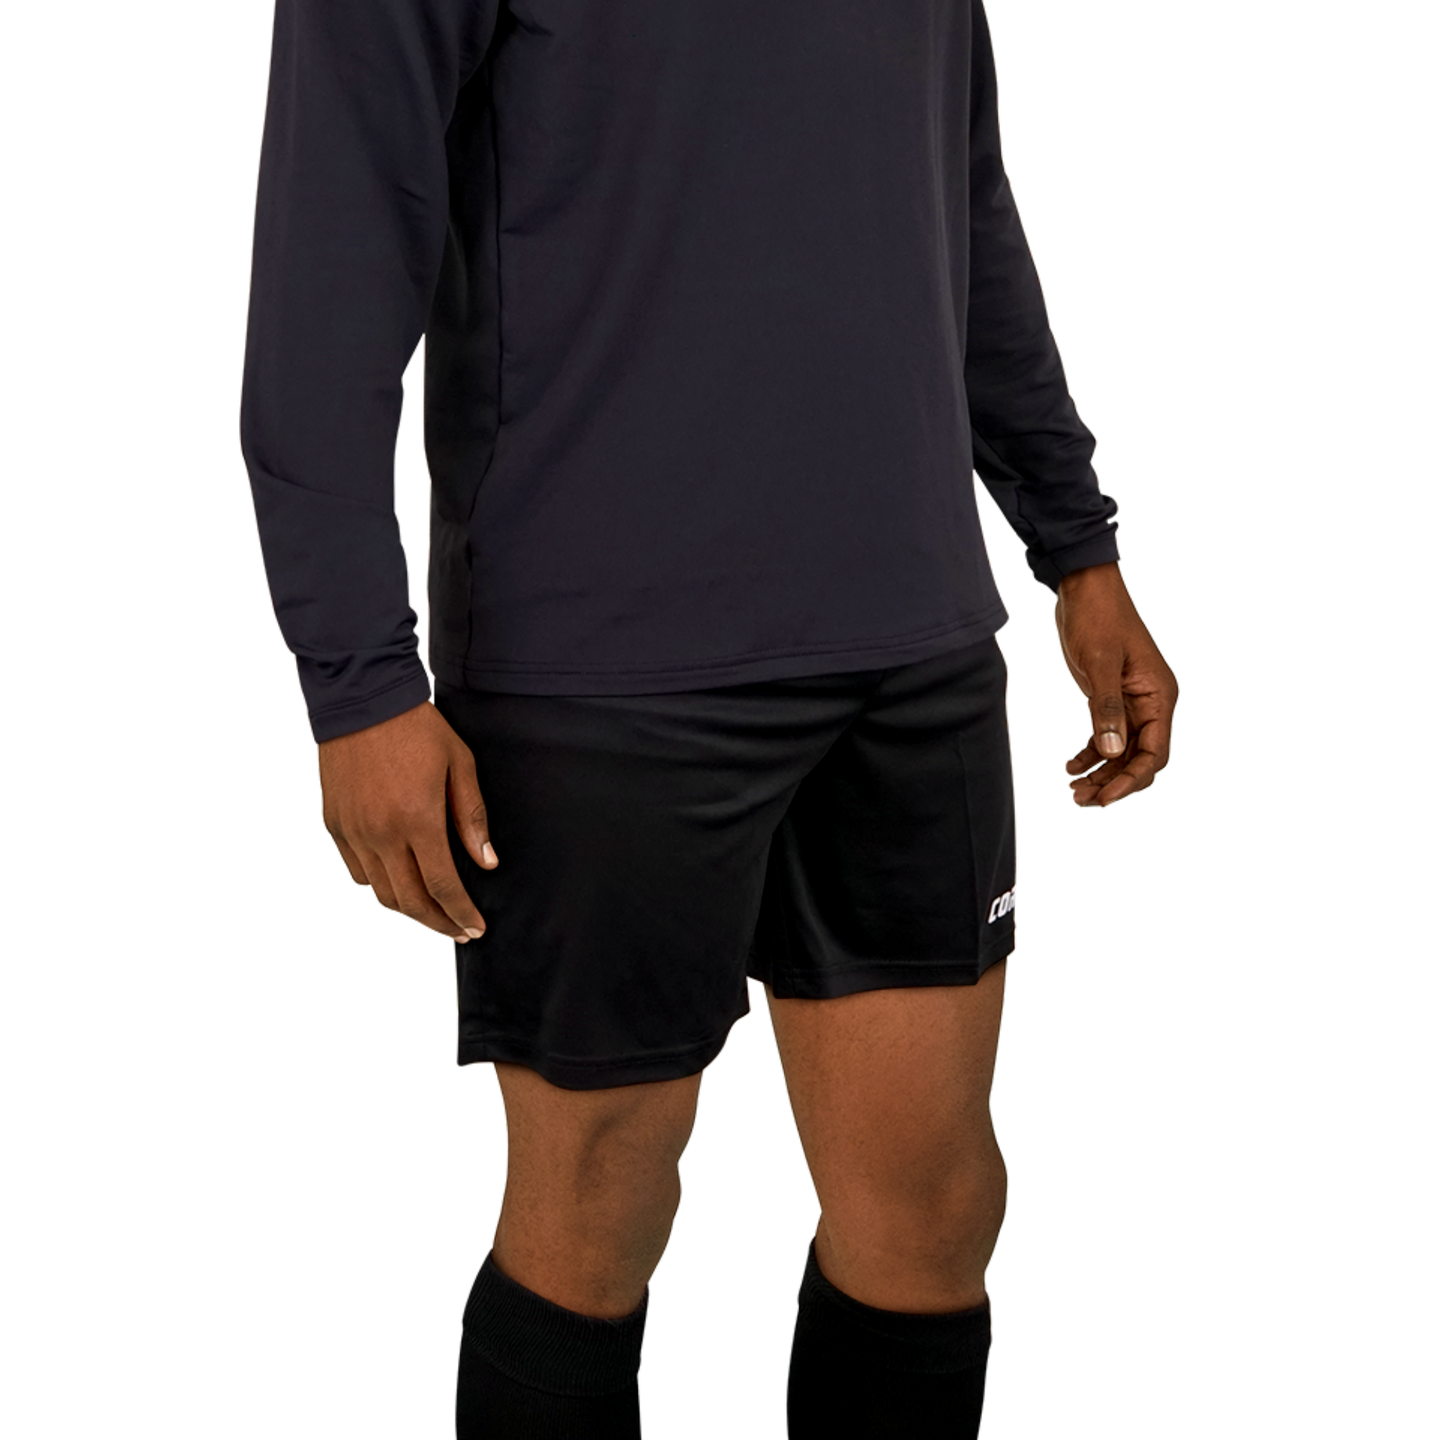 Essential Football Shorts - Black